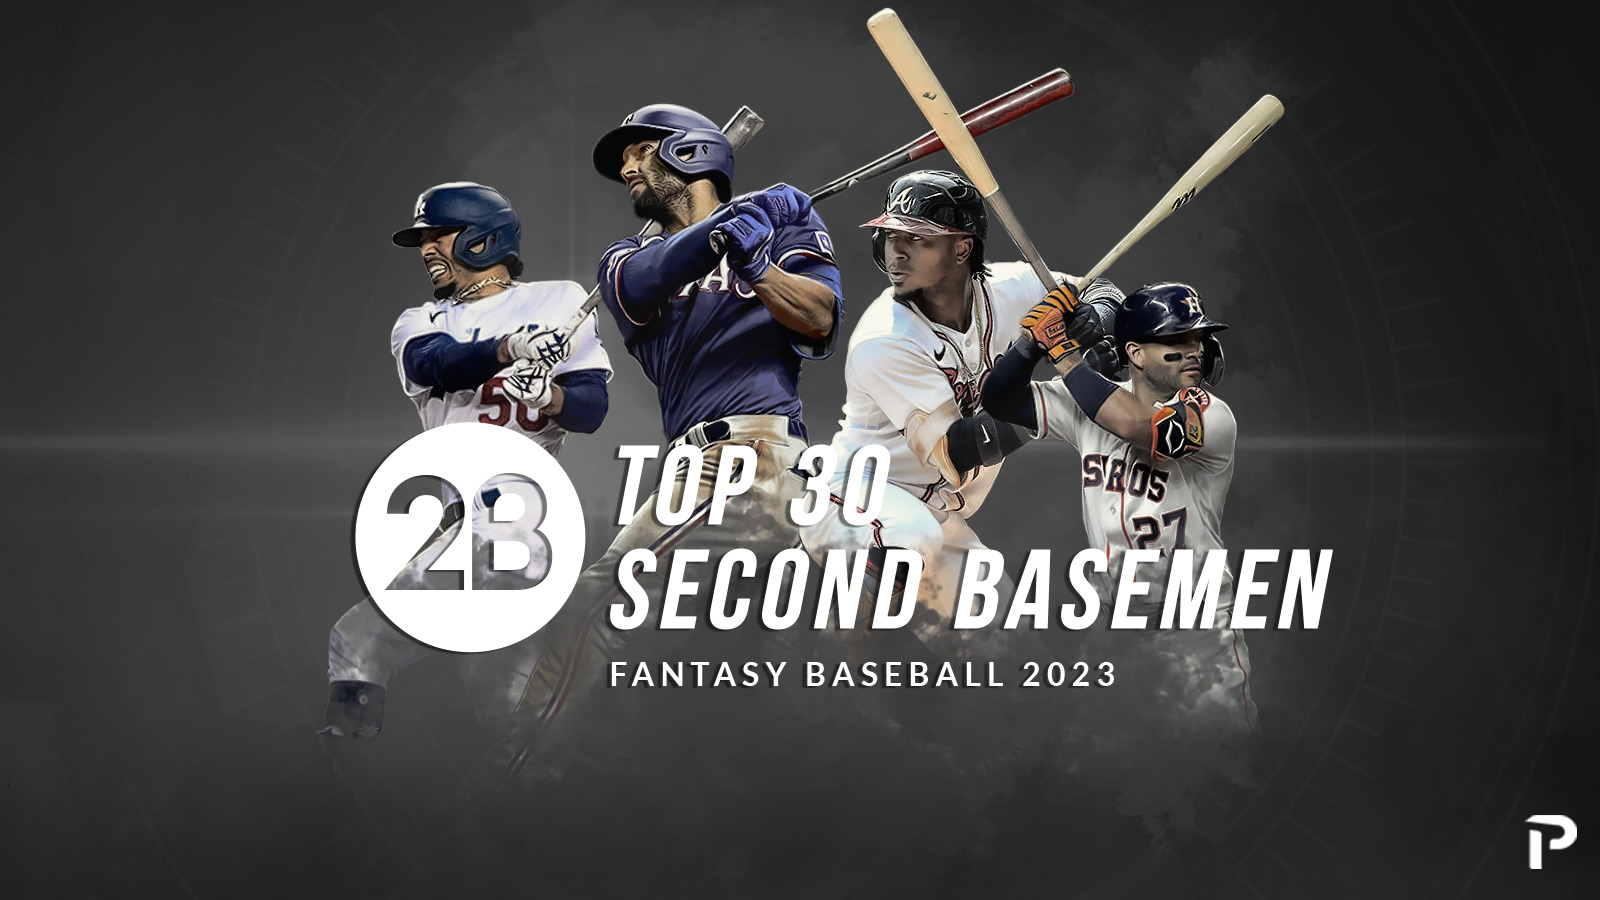 MLB Position Power Rankings 2018: B/R's Top 30 Second Basemen